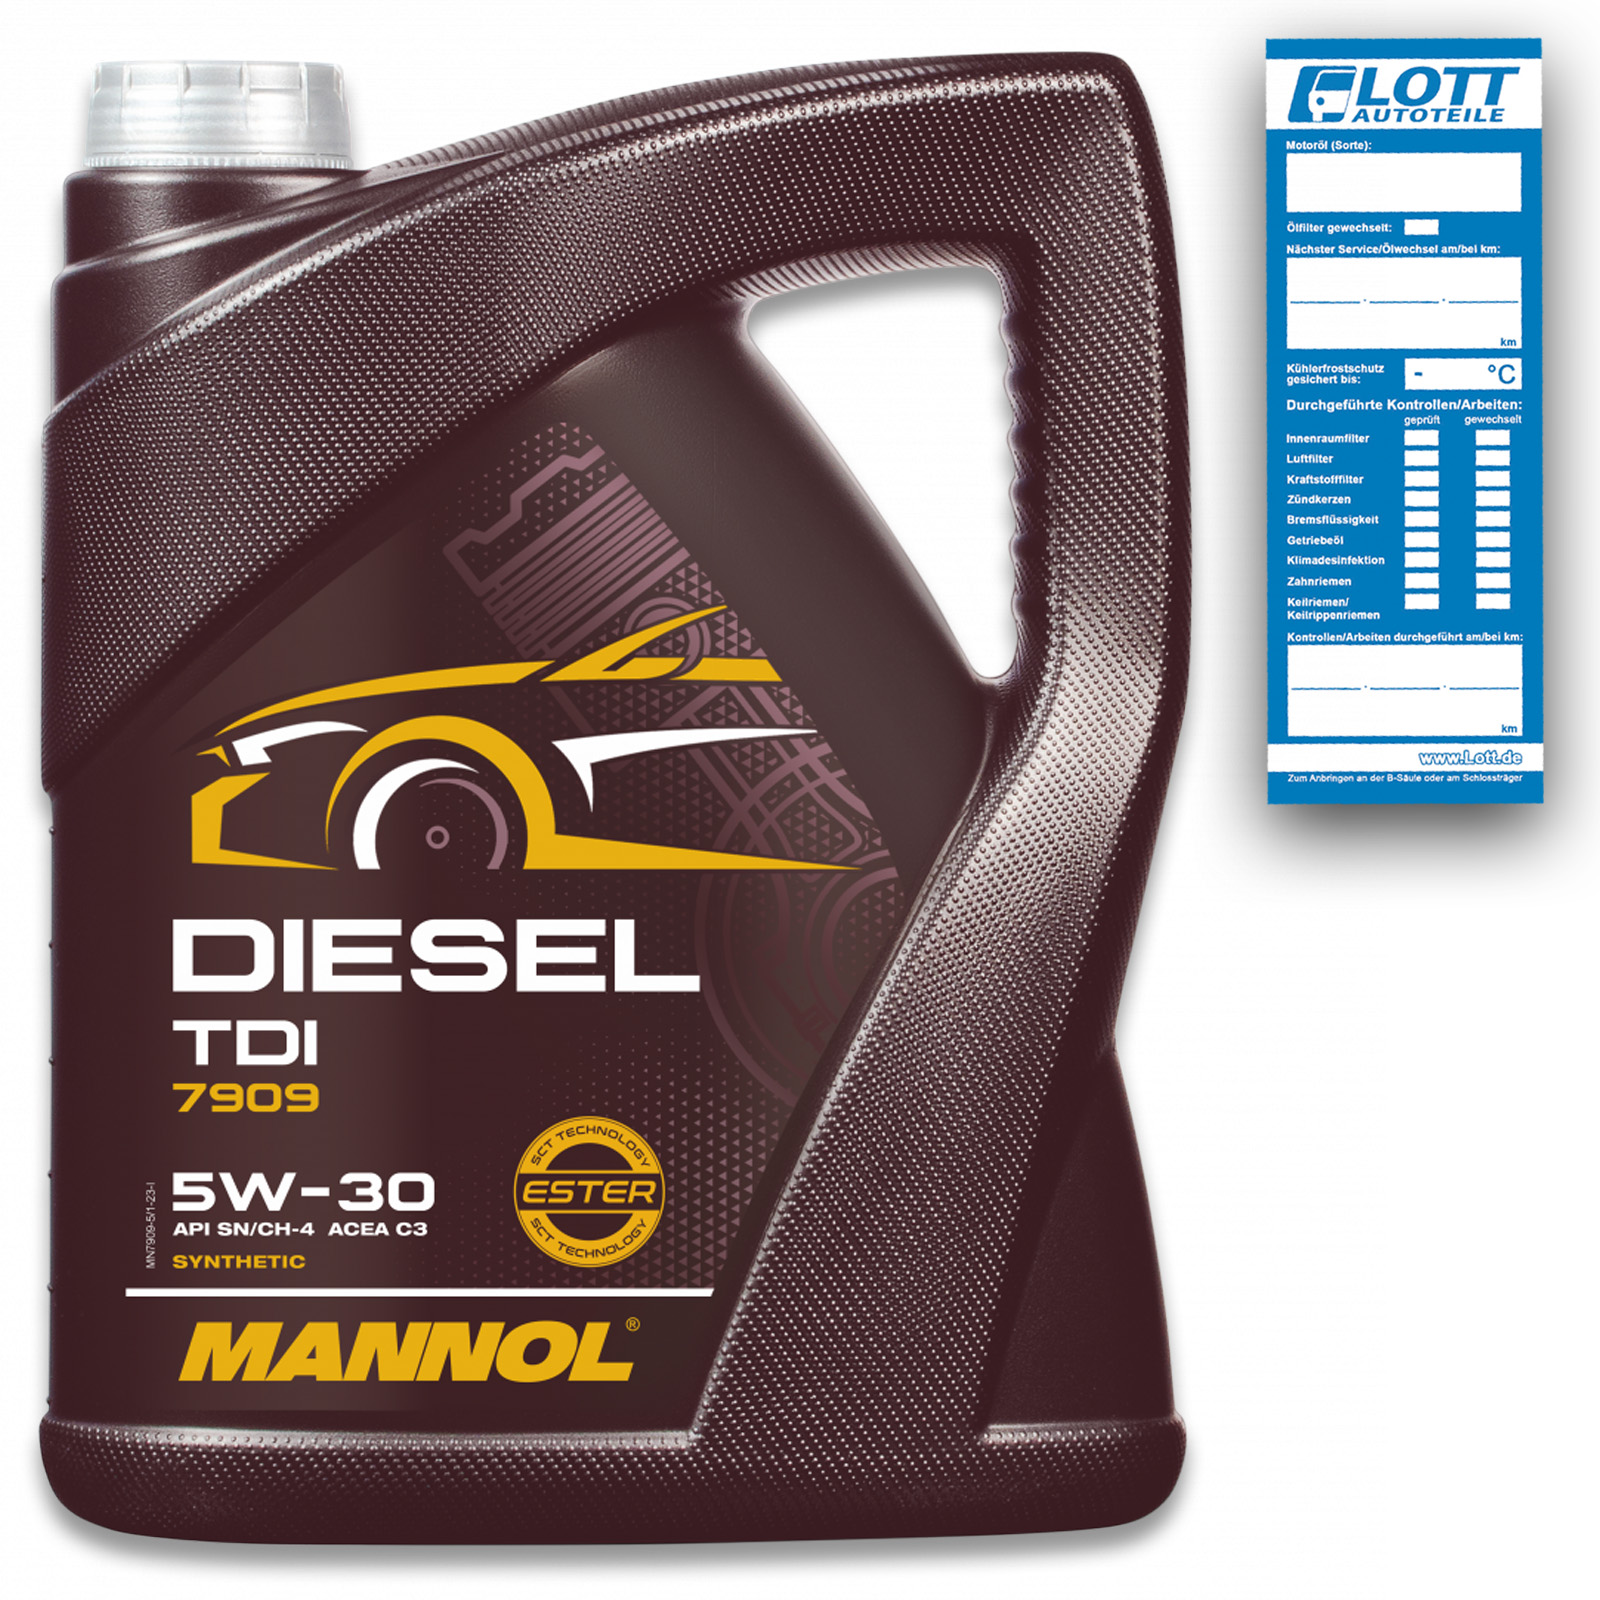 Mannol Motoröl Diesel TDI 5W-30 5L